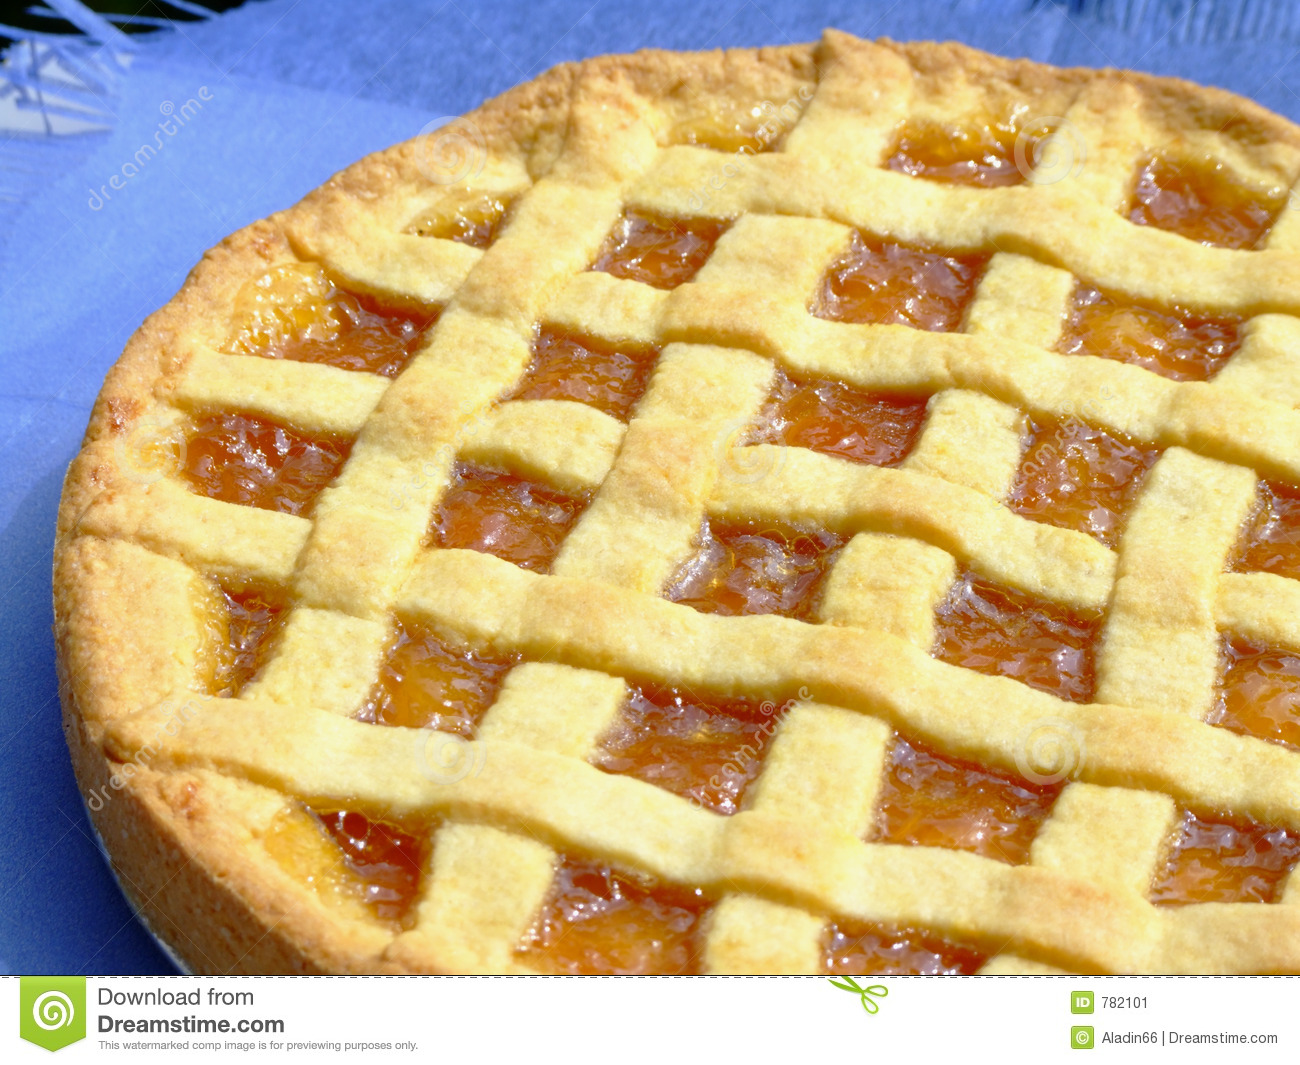 Apricot Marmalade Tart Stock Image   Image  782101